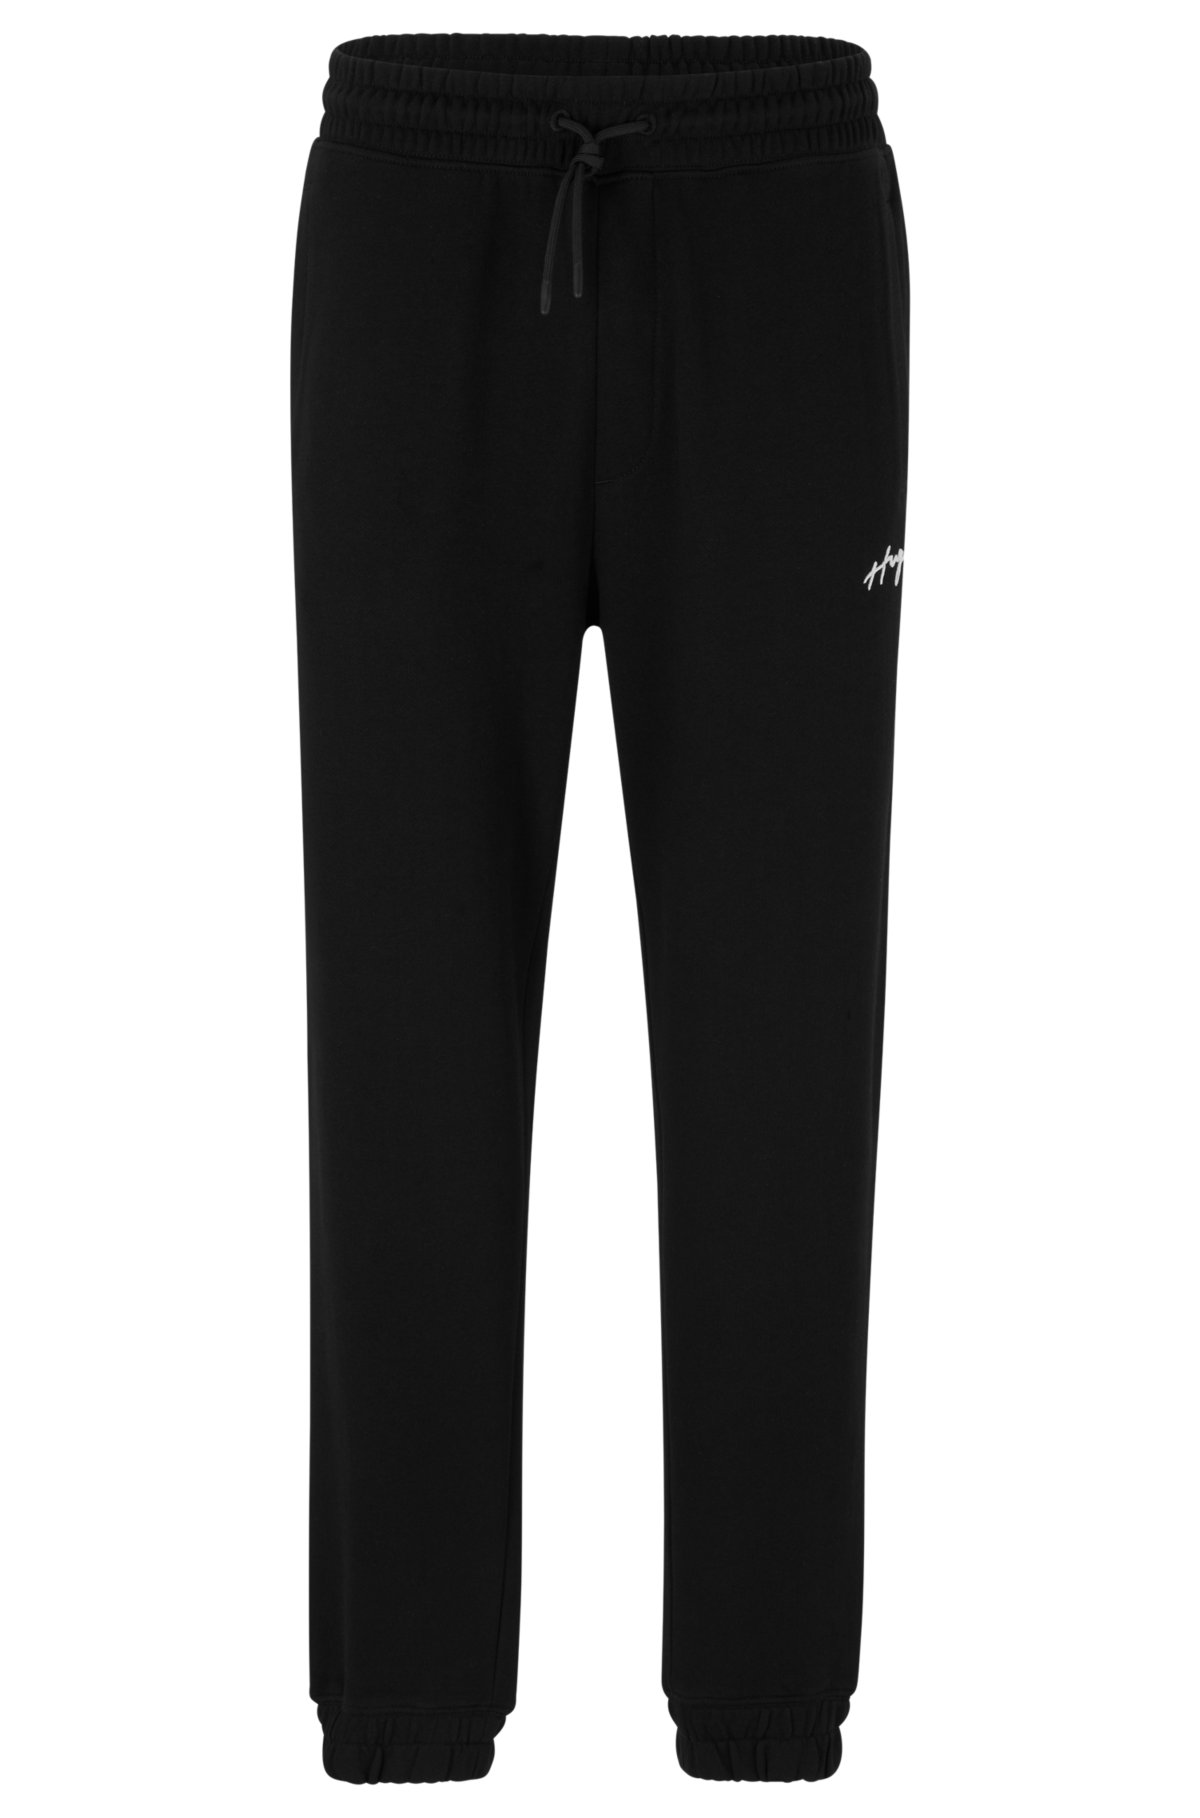 Louis Vuitton Monogram Mens Joggers & Sweatpants, Black, M (Stock Confirmation Required)